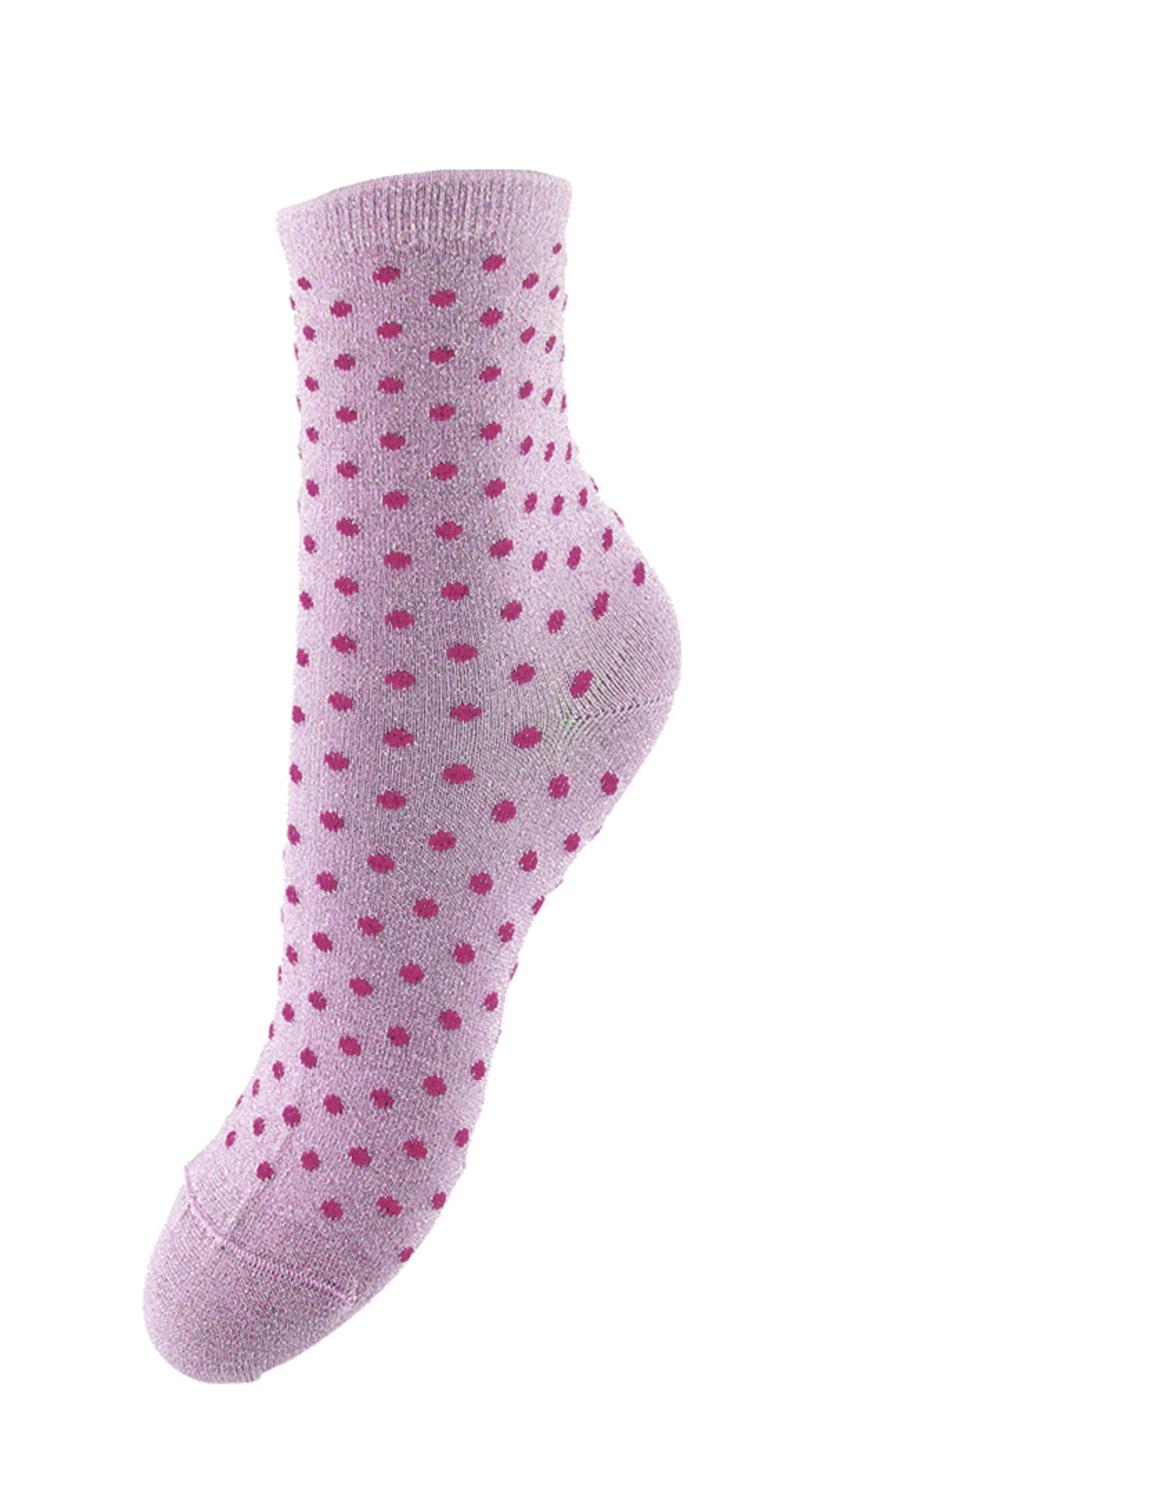 PCSEBBY Socks - Pastel Lavender